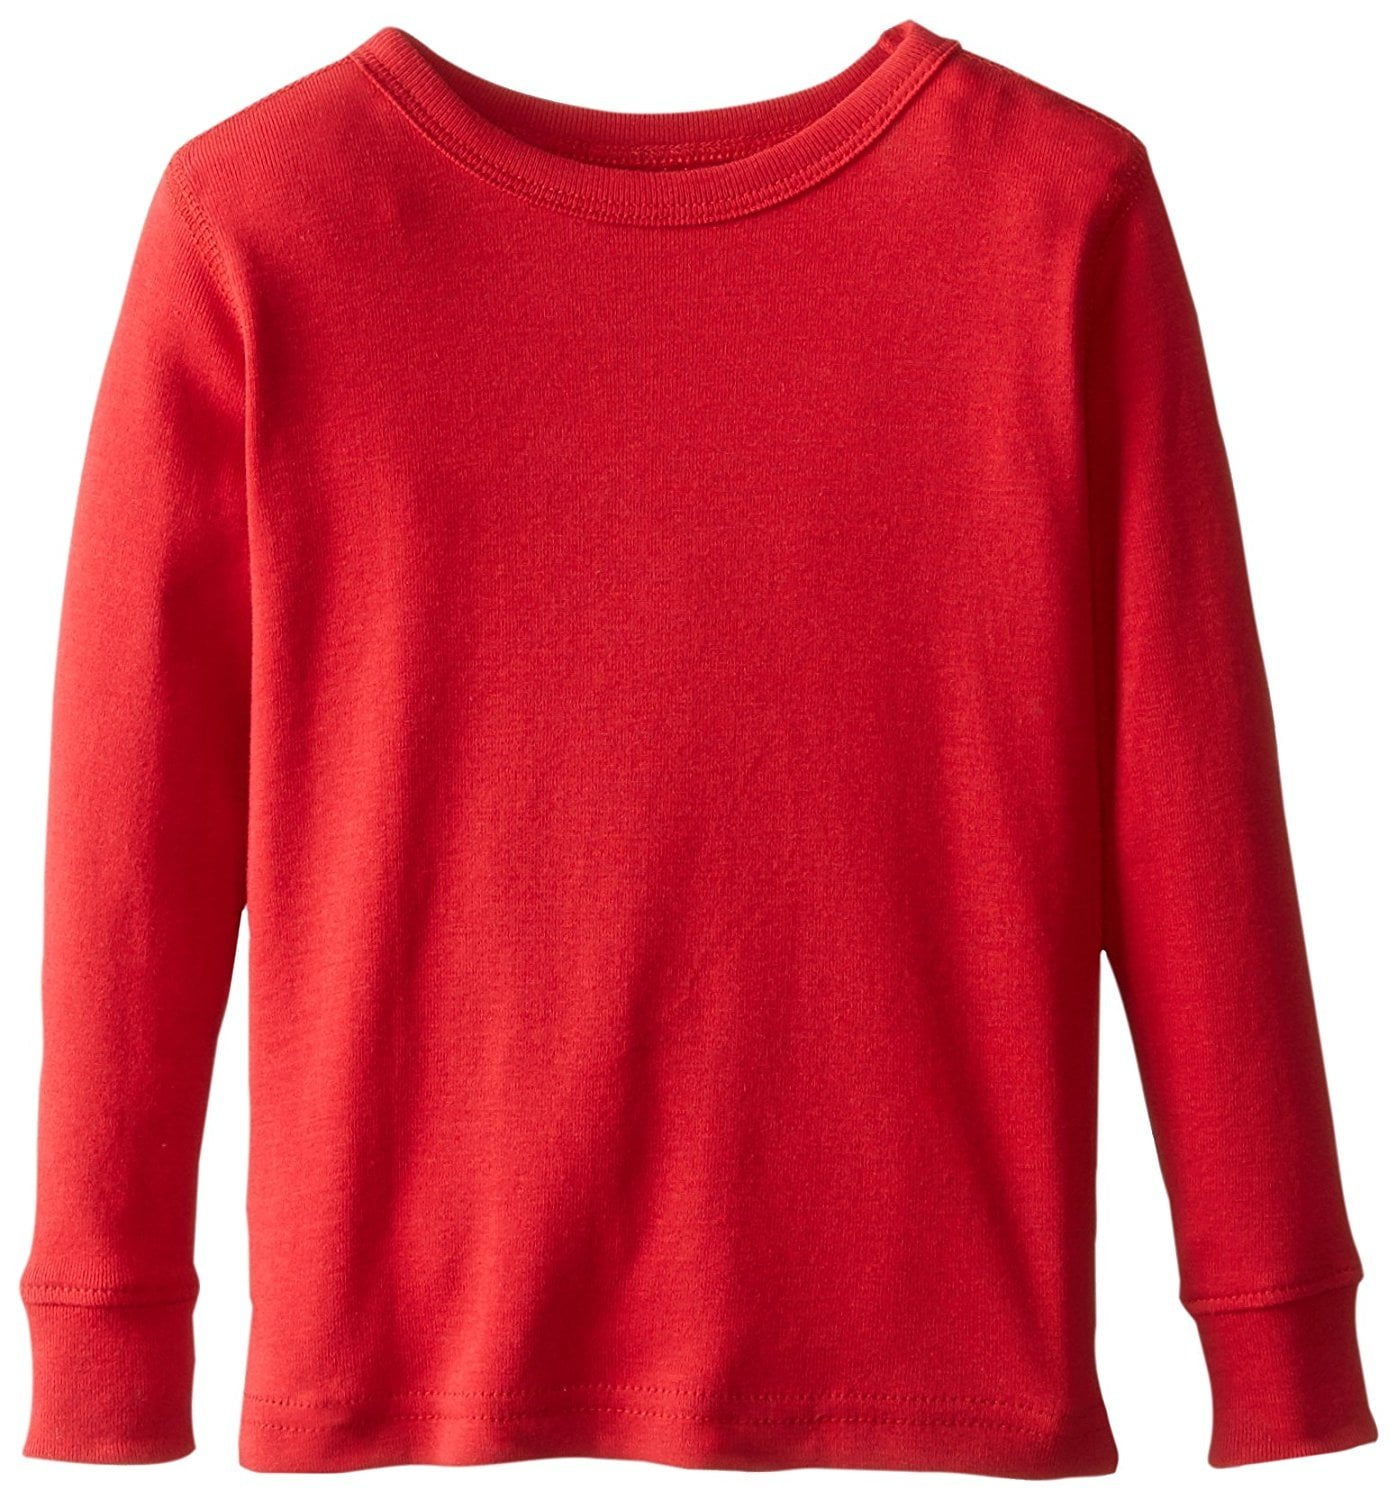 Size 2-14 Years Leveret Kids & Toddler Sweatshirt Boys Girls Long Sleeve Shirt Variety of Colors 